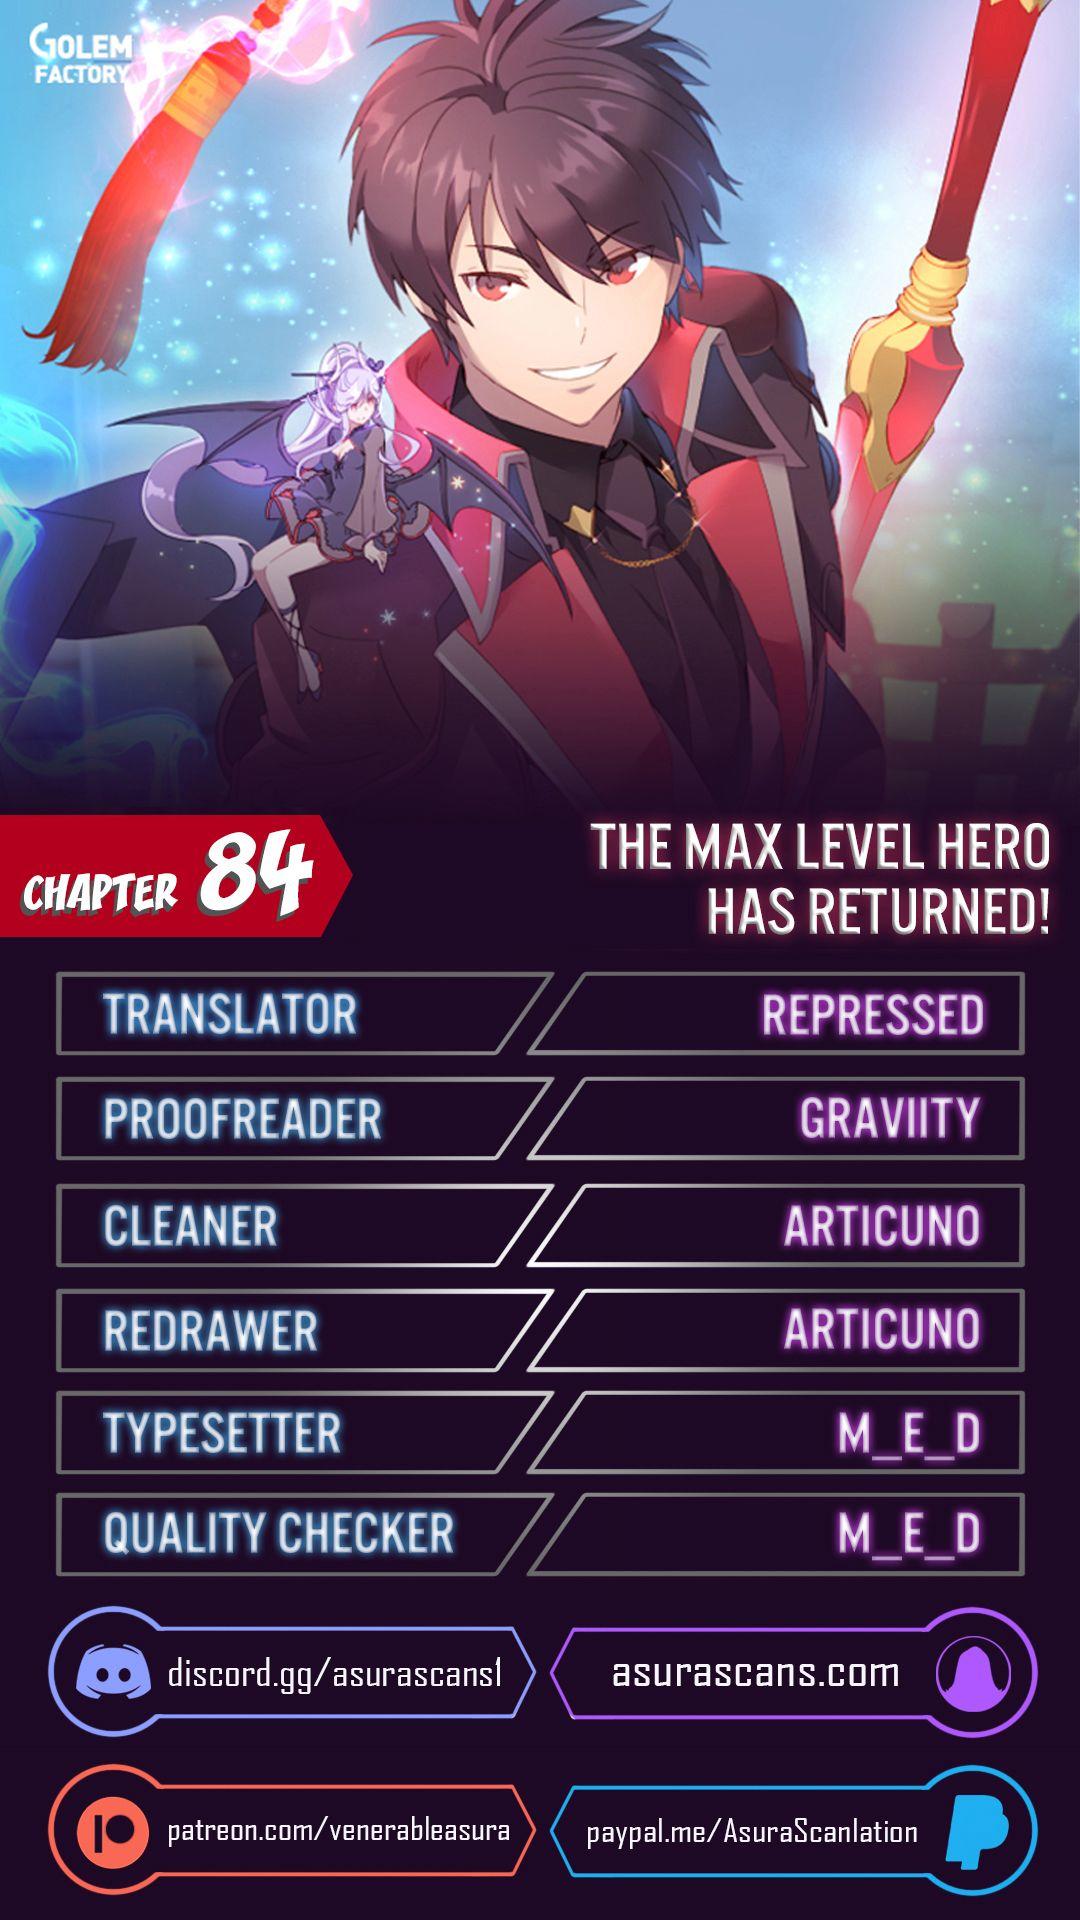 The Max Level Hero Strikes Back Manga